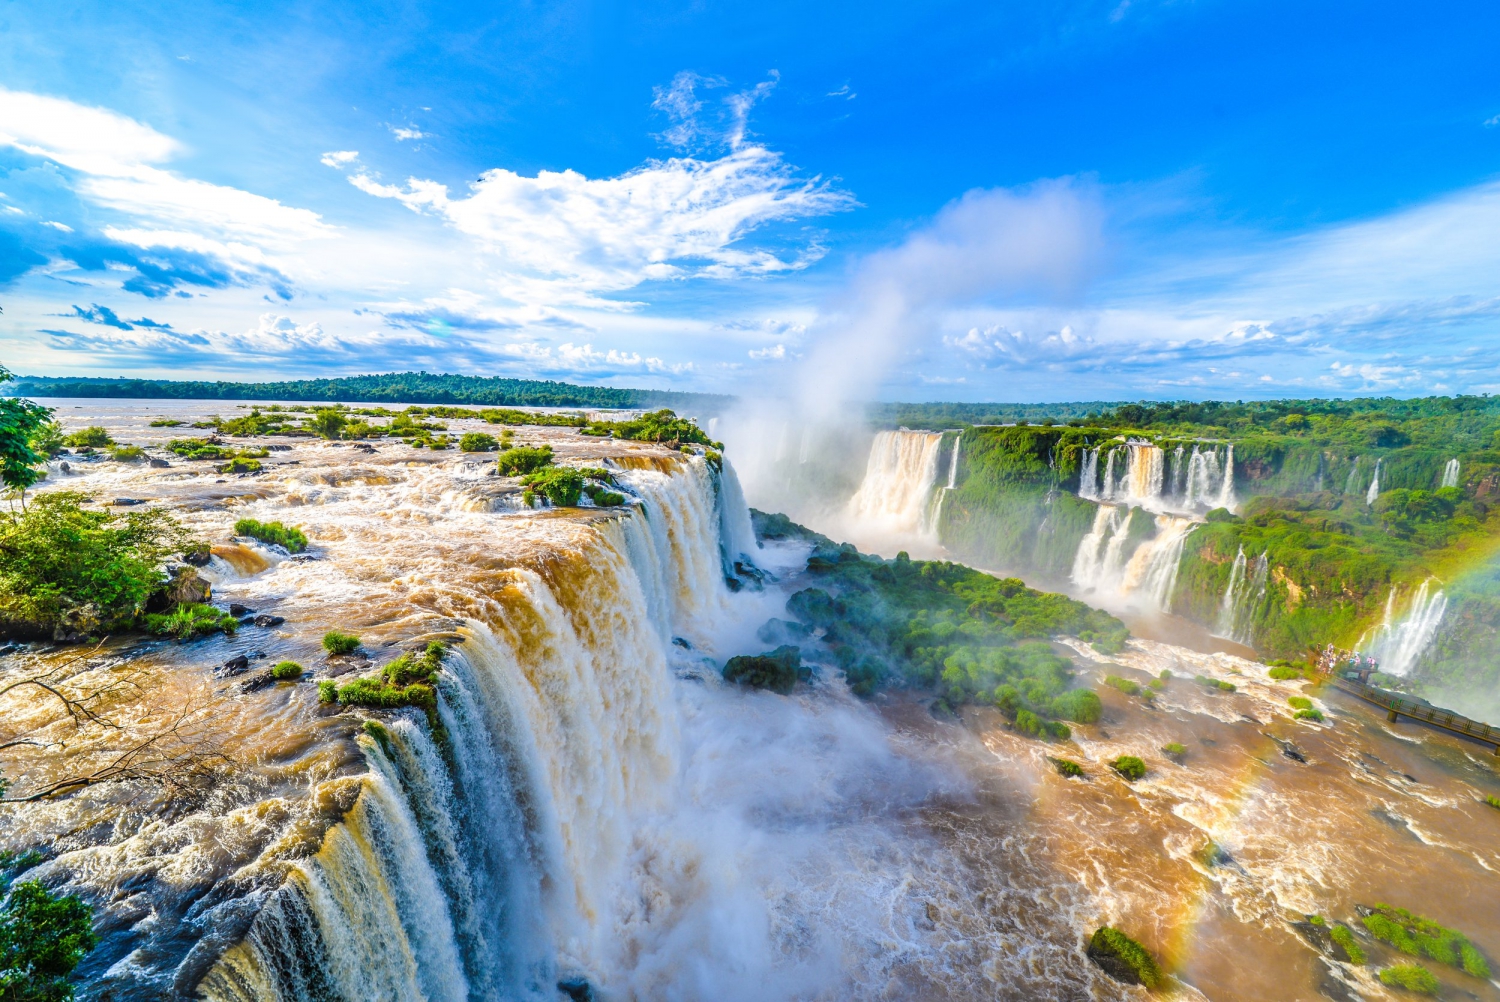 The Iguazu Falls - the Argentine side